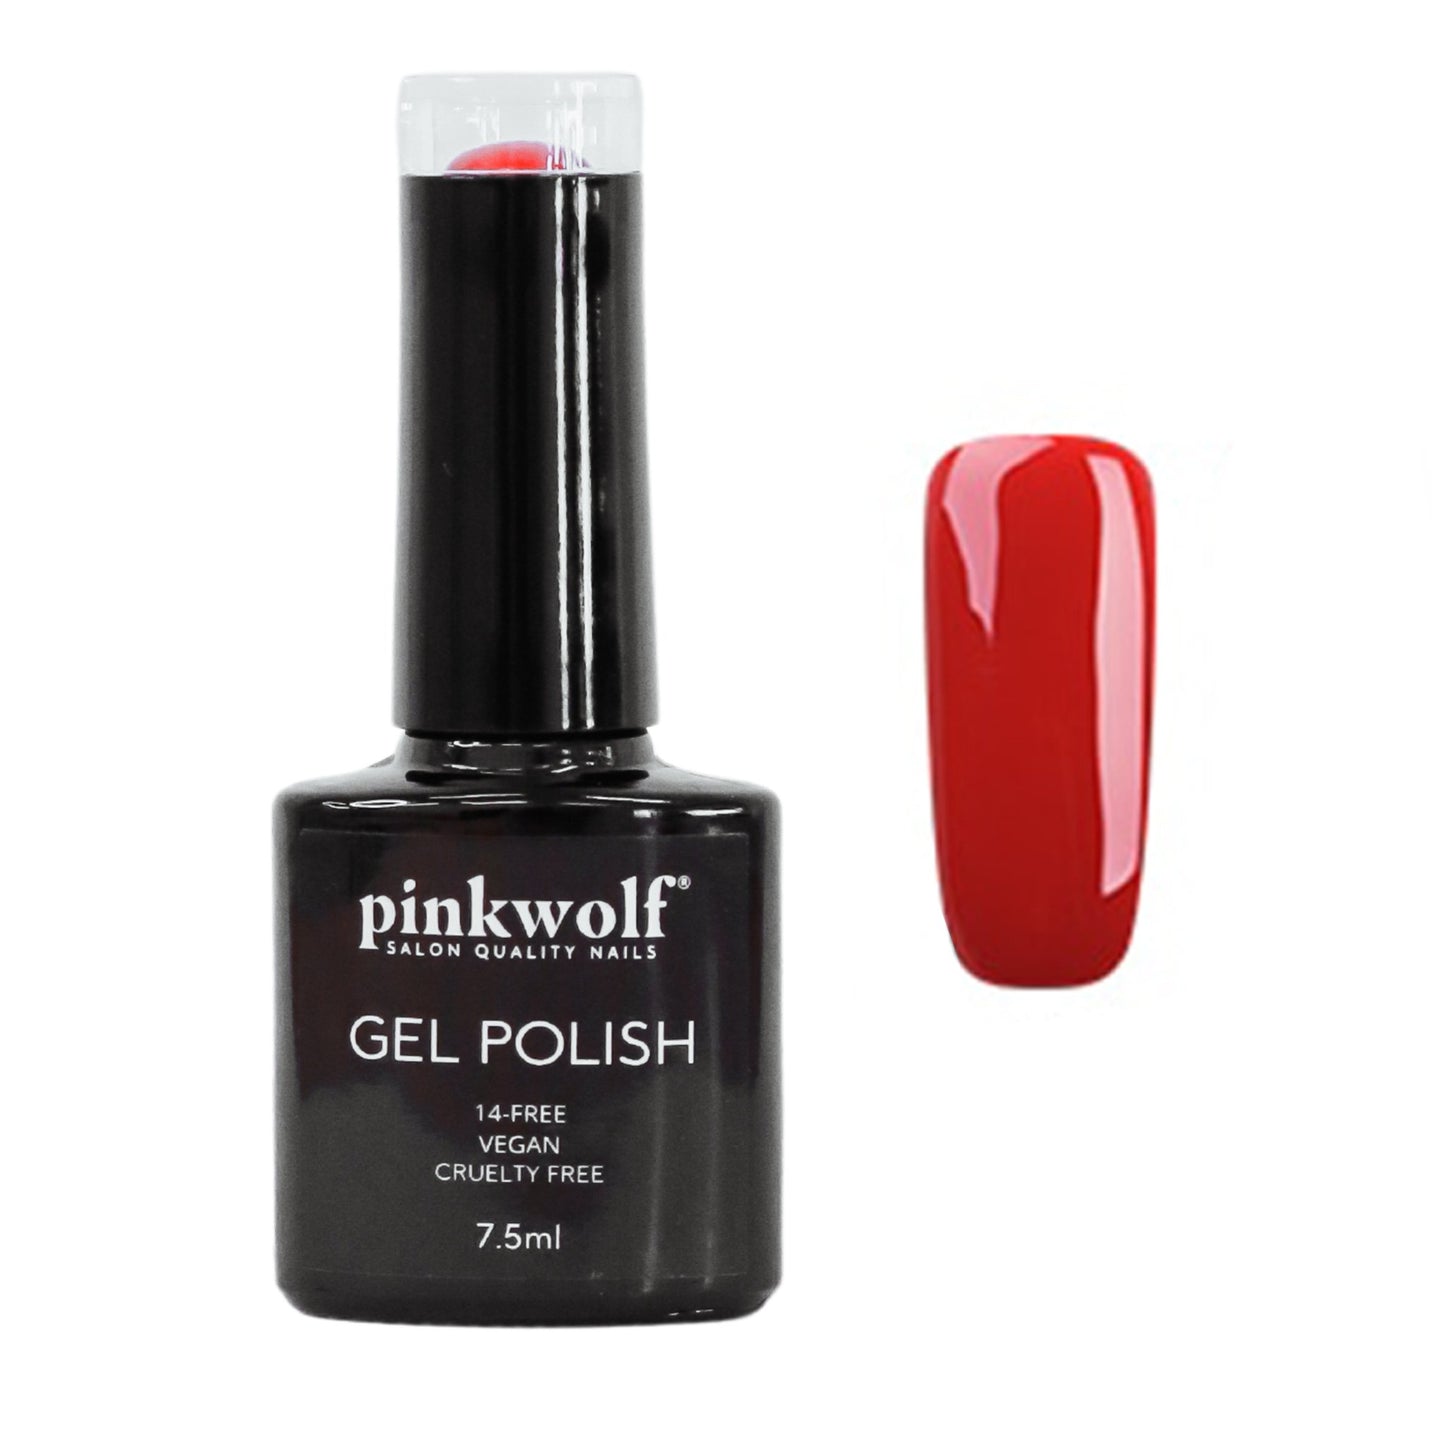 Pinkwolf gel nail polish red 7.5ml bottle